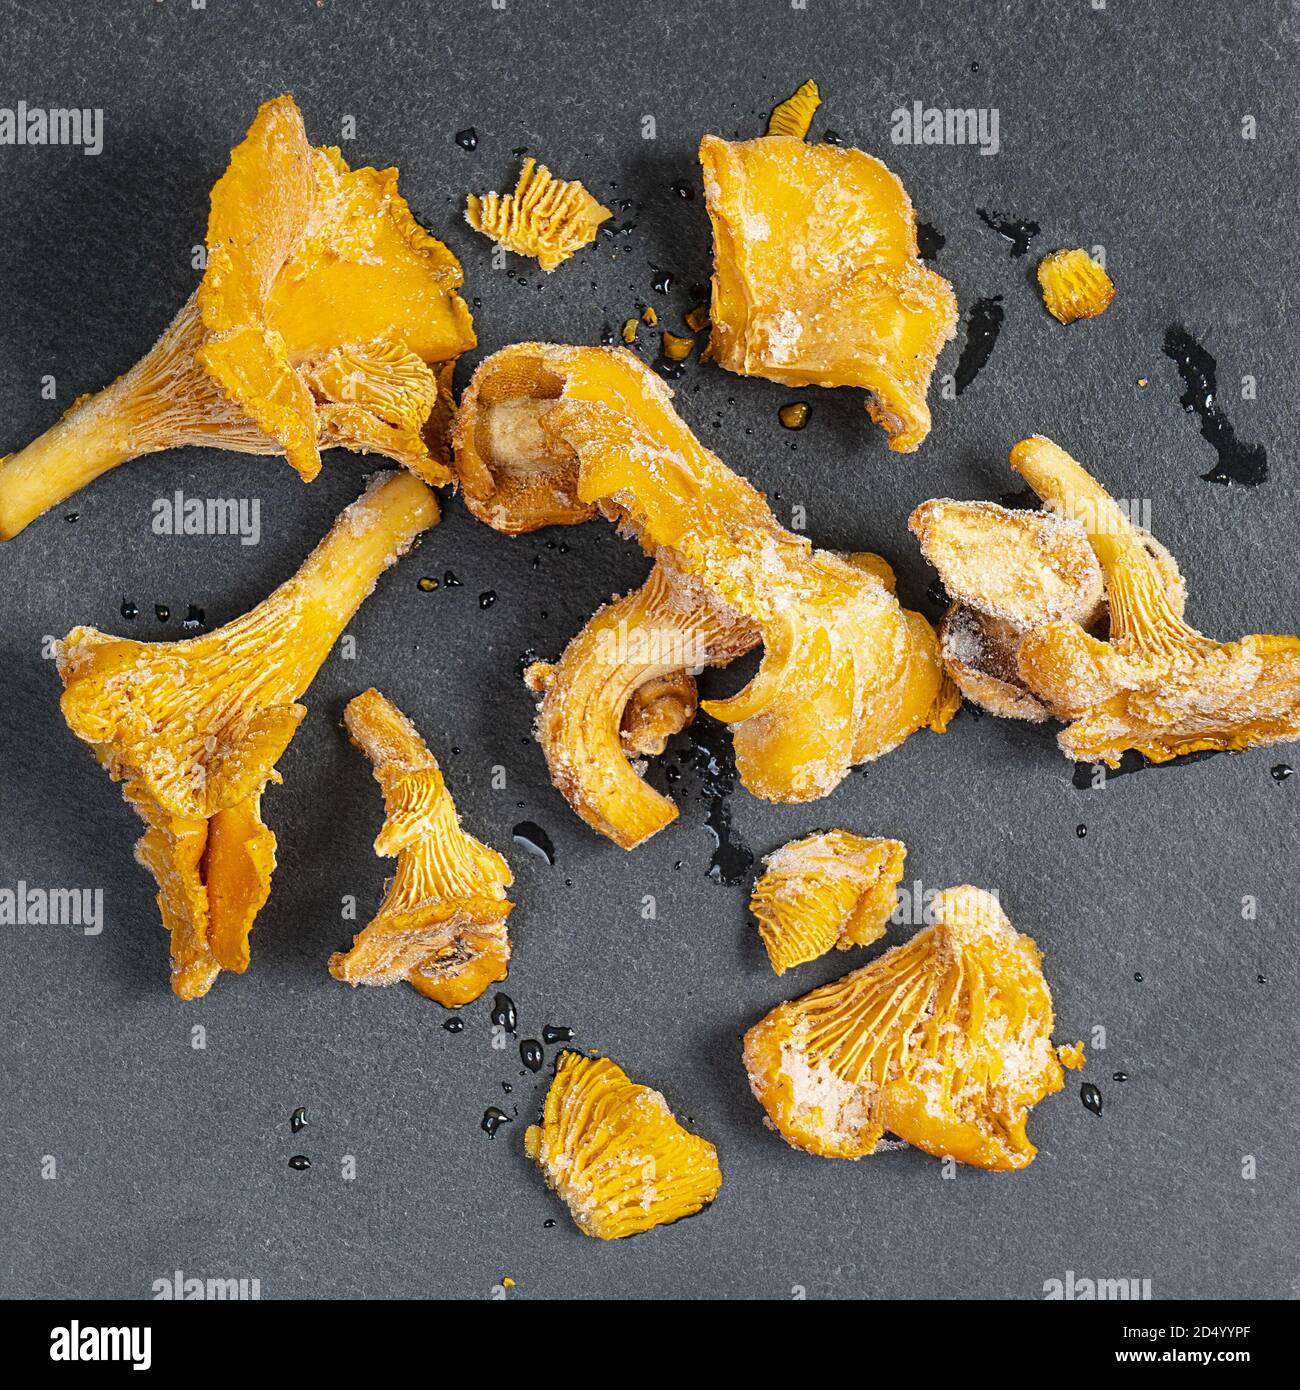 Some frozen chanterelle,  Cantharellus cibarius,  mushrooms on a black surface Stock Photo